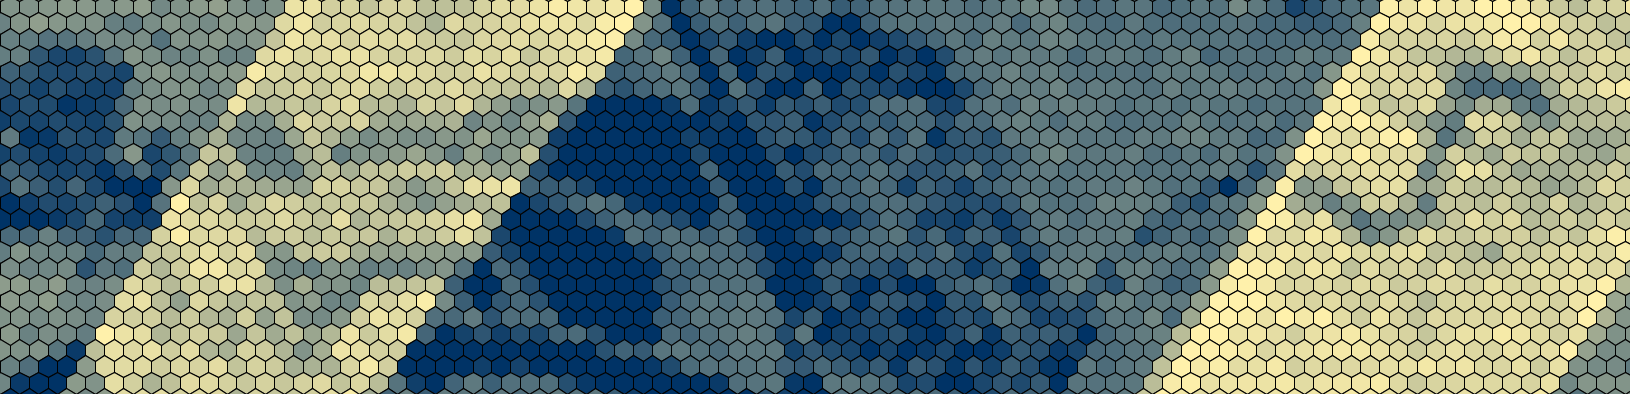 Hexagonal tessellation